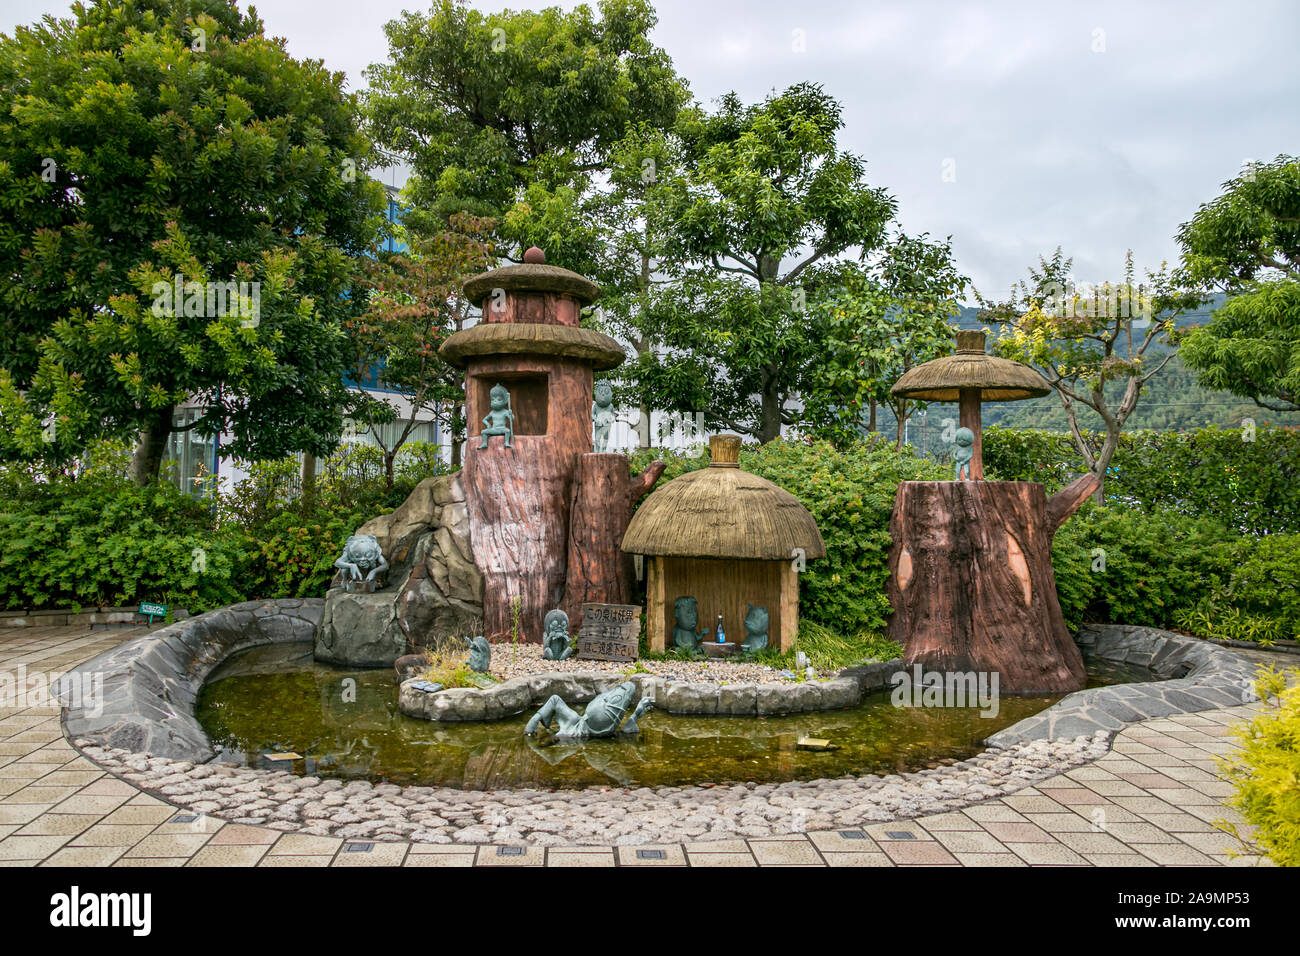 The Kappa Fountain with Shigeru Mizuki statues in Sakaiminato, Japan. Stock Photo